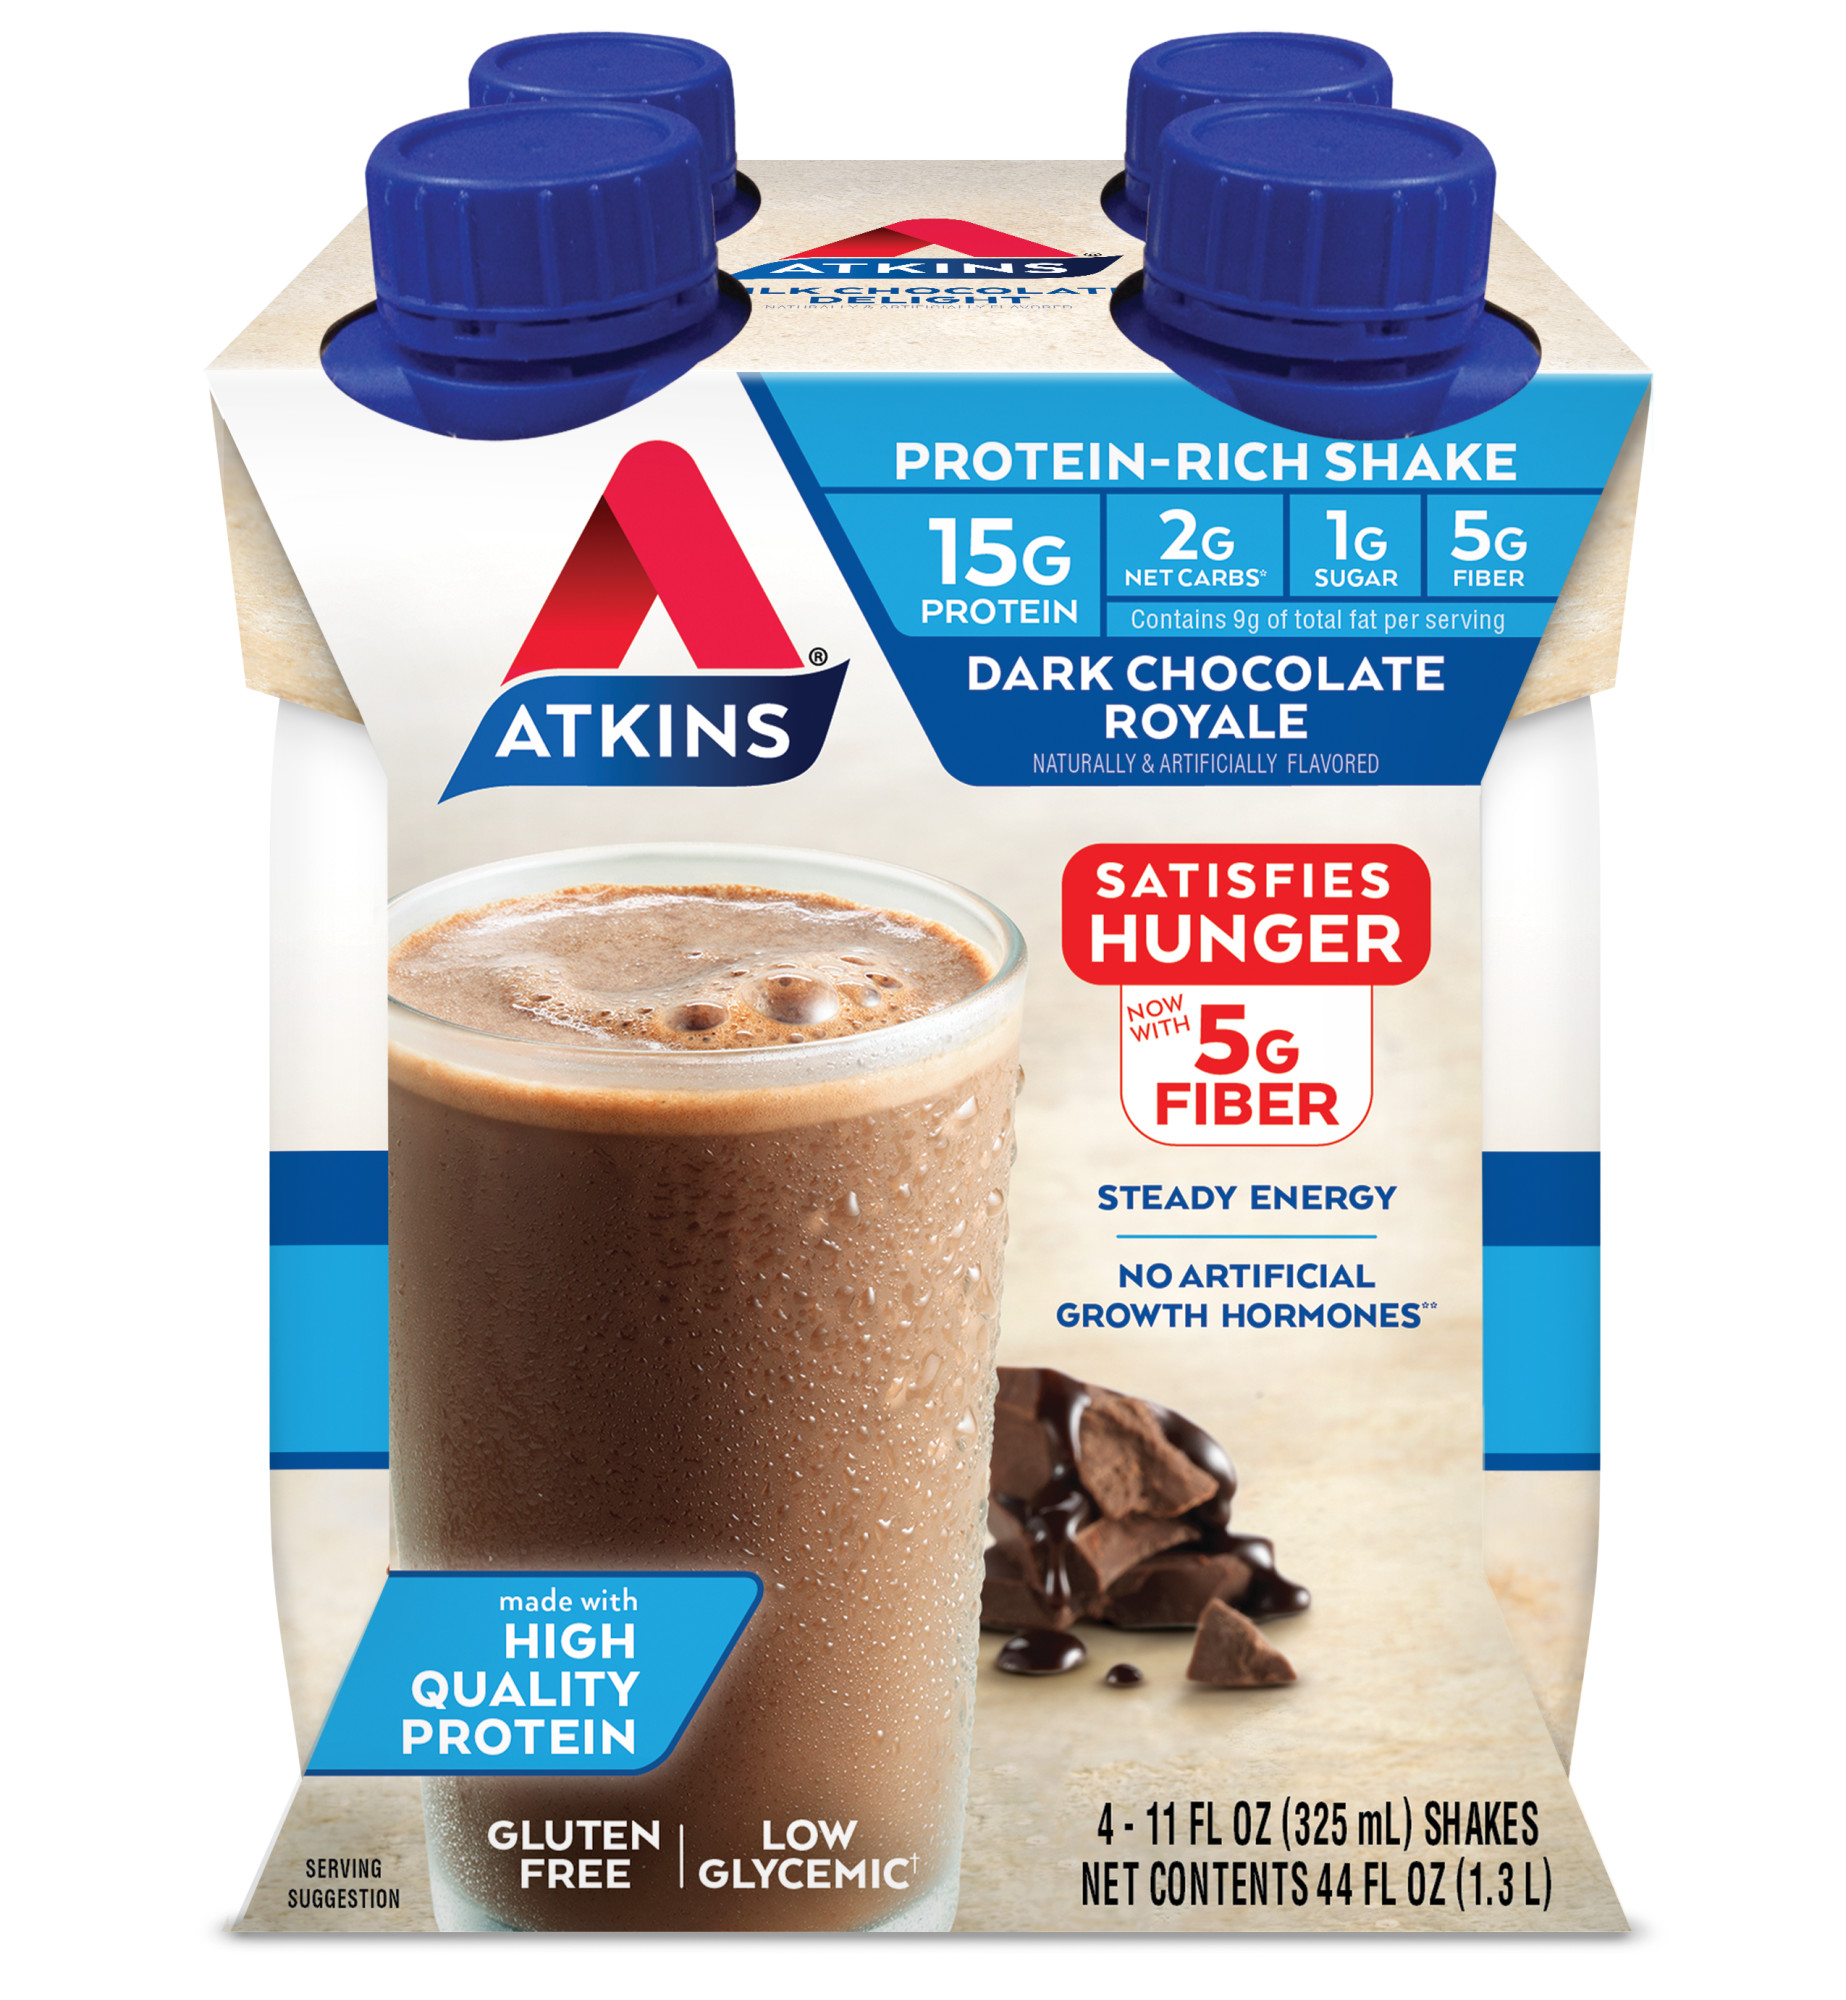 Atkins Dark Chocolate Royale Protein Shake, High Protein, Low Carb, Keto Friendly, Gluten Free, 11fl oz, 4 Ct - image 1 of 8